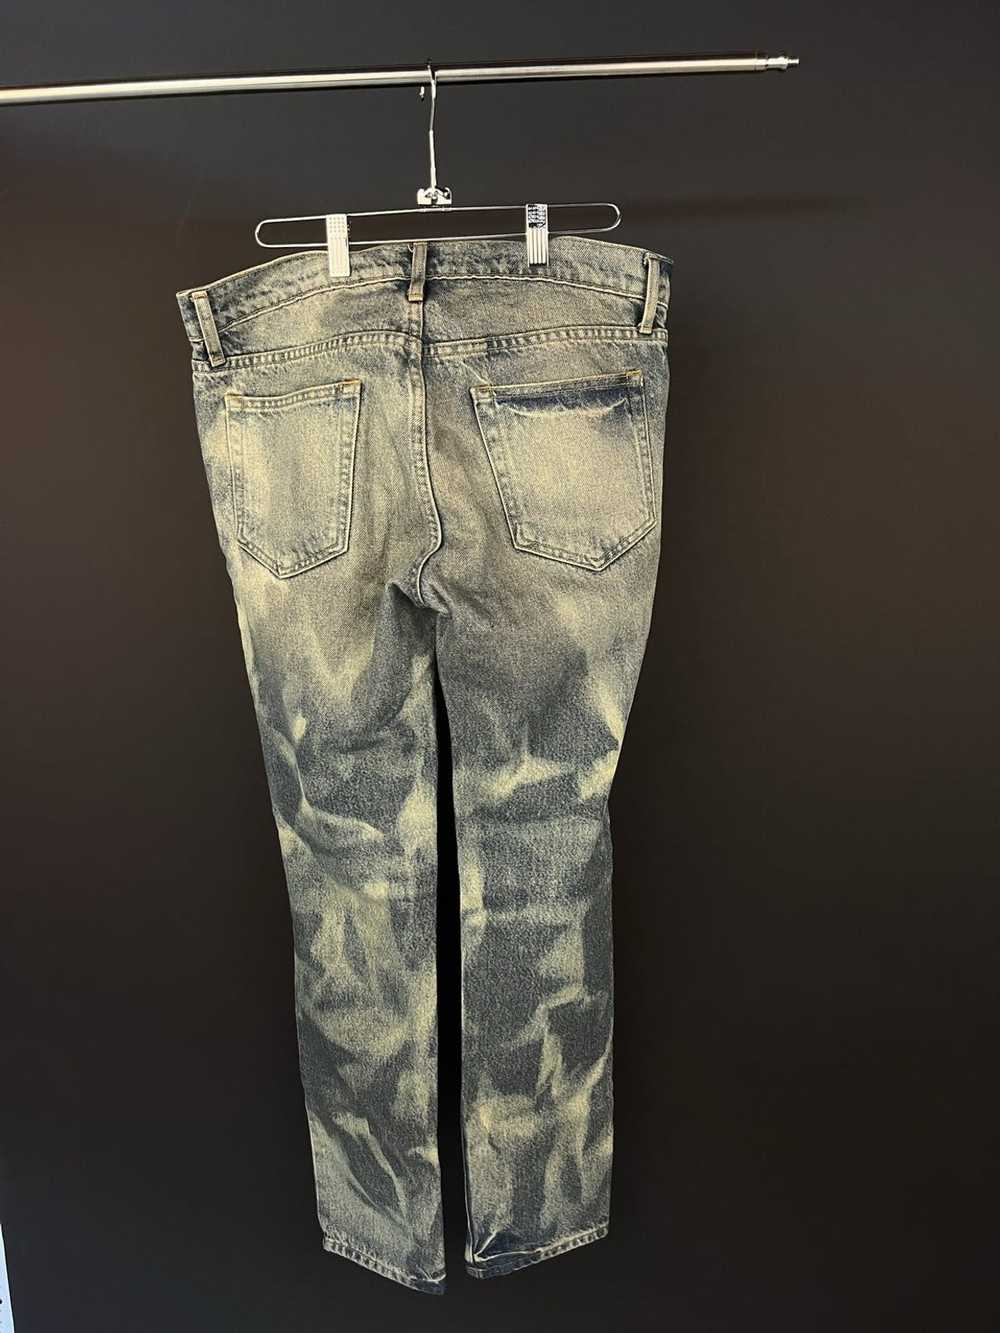 424 On Fairfax 424 on Fairfax bleach jeans - image 2